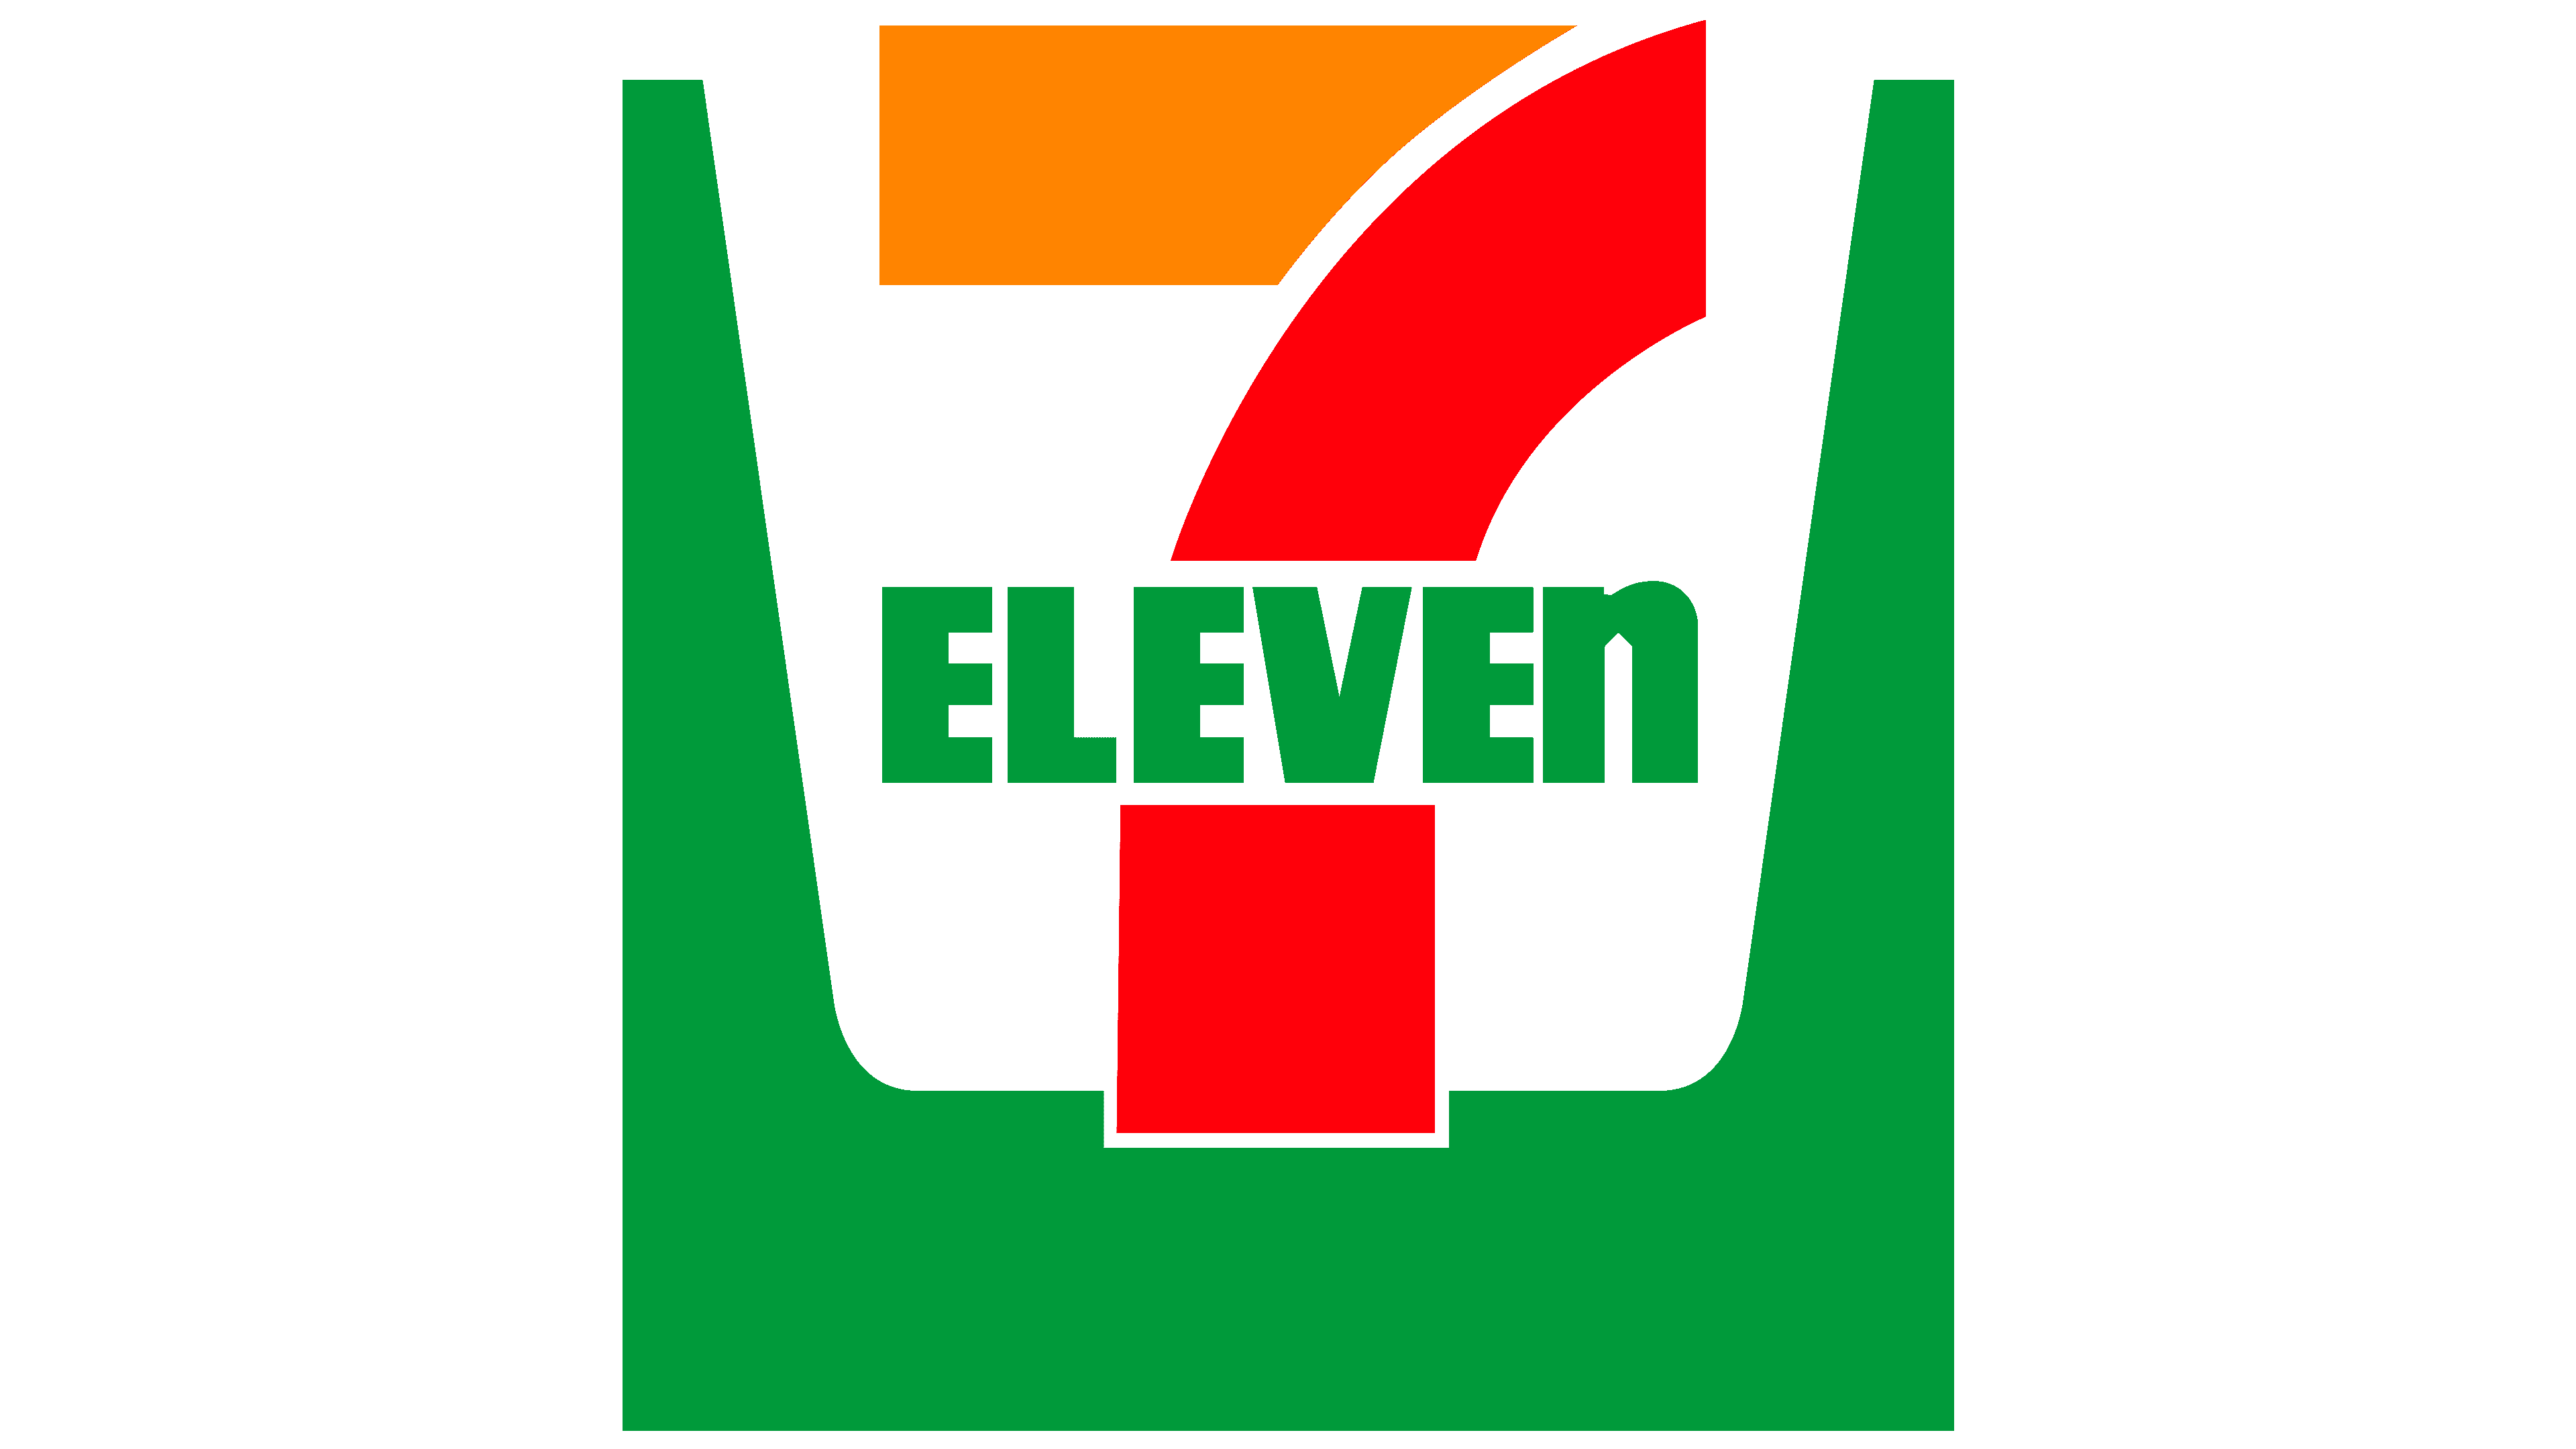 7 Eleven Symbol